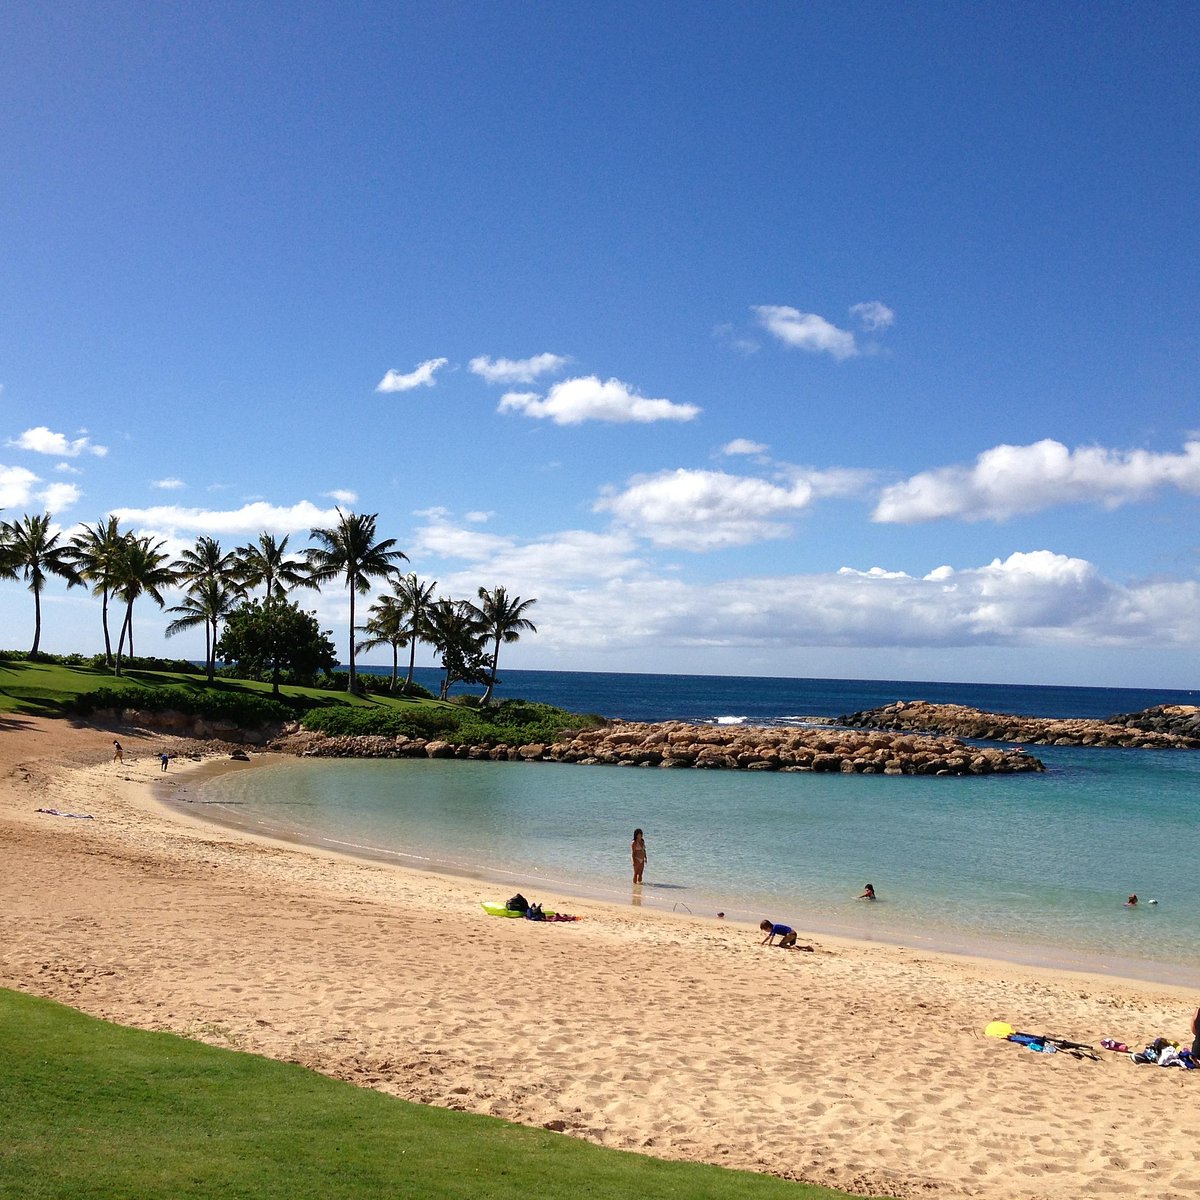  Ko Olina  strand - Hawaii Islands